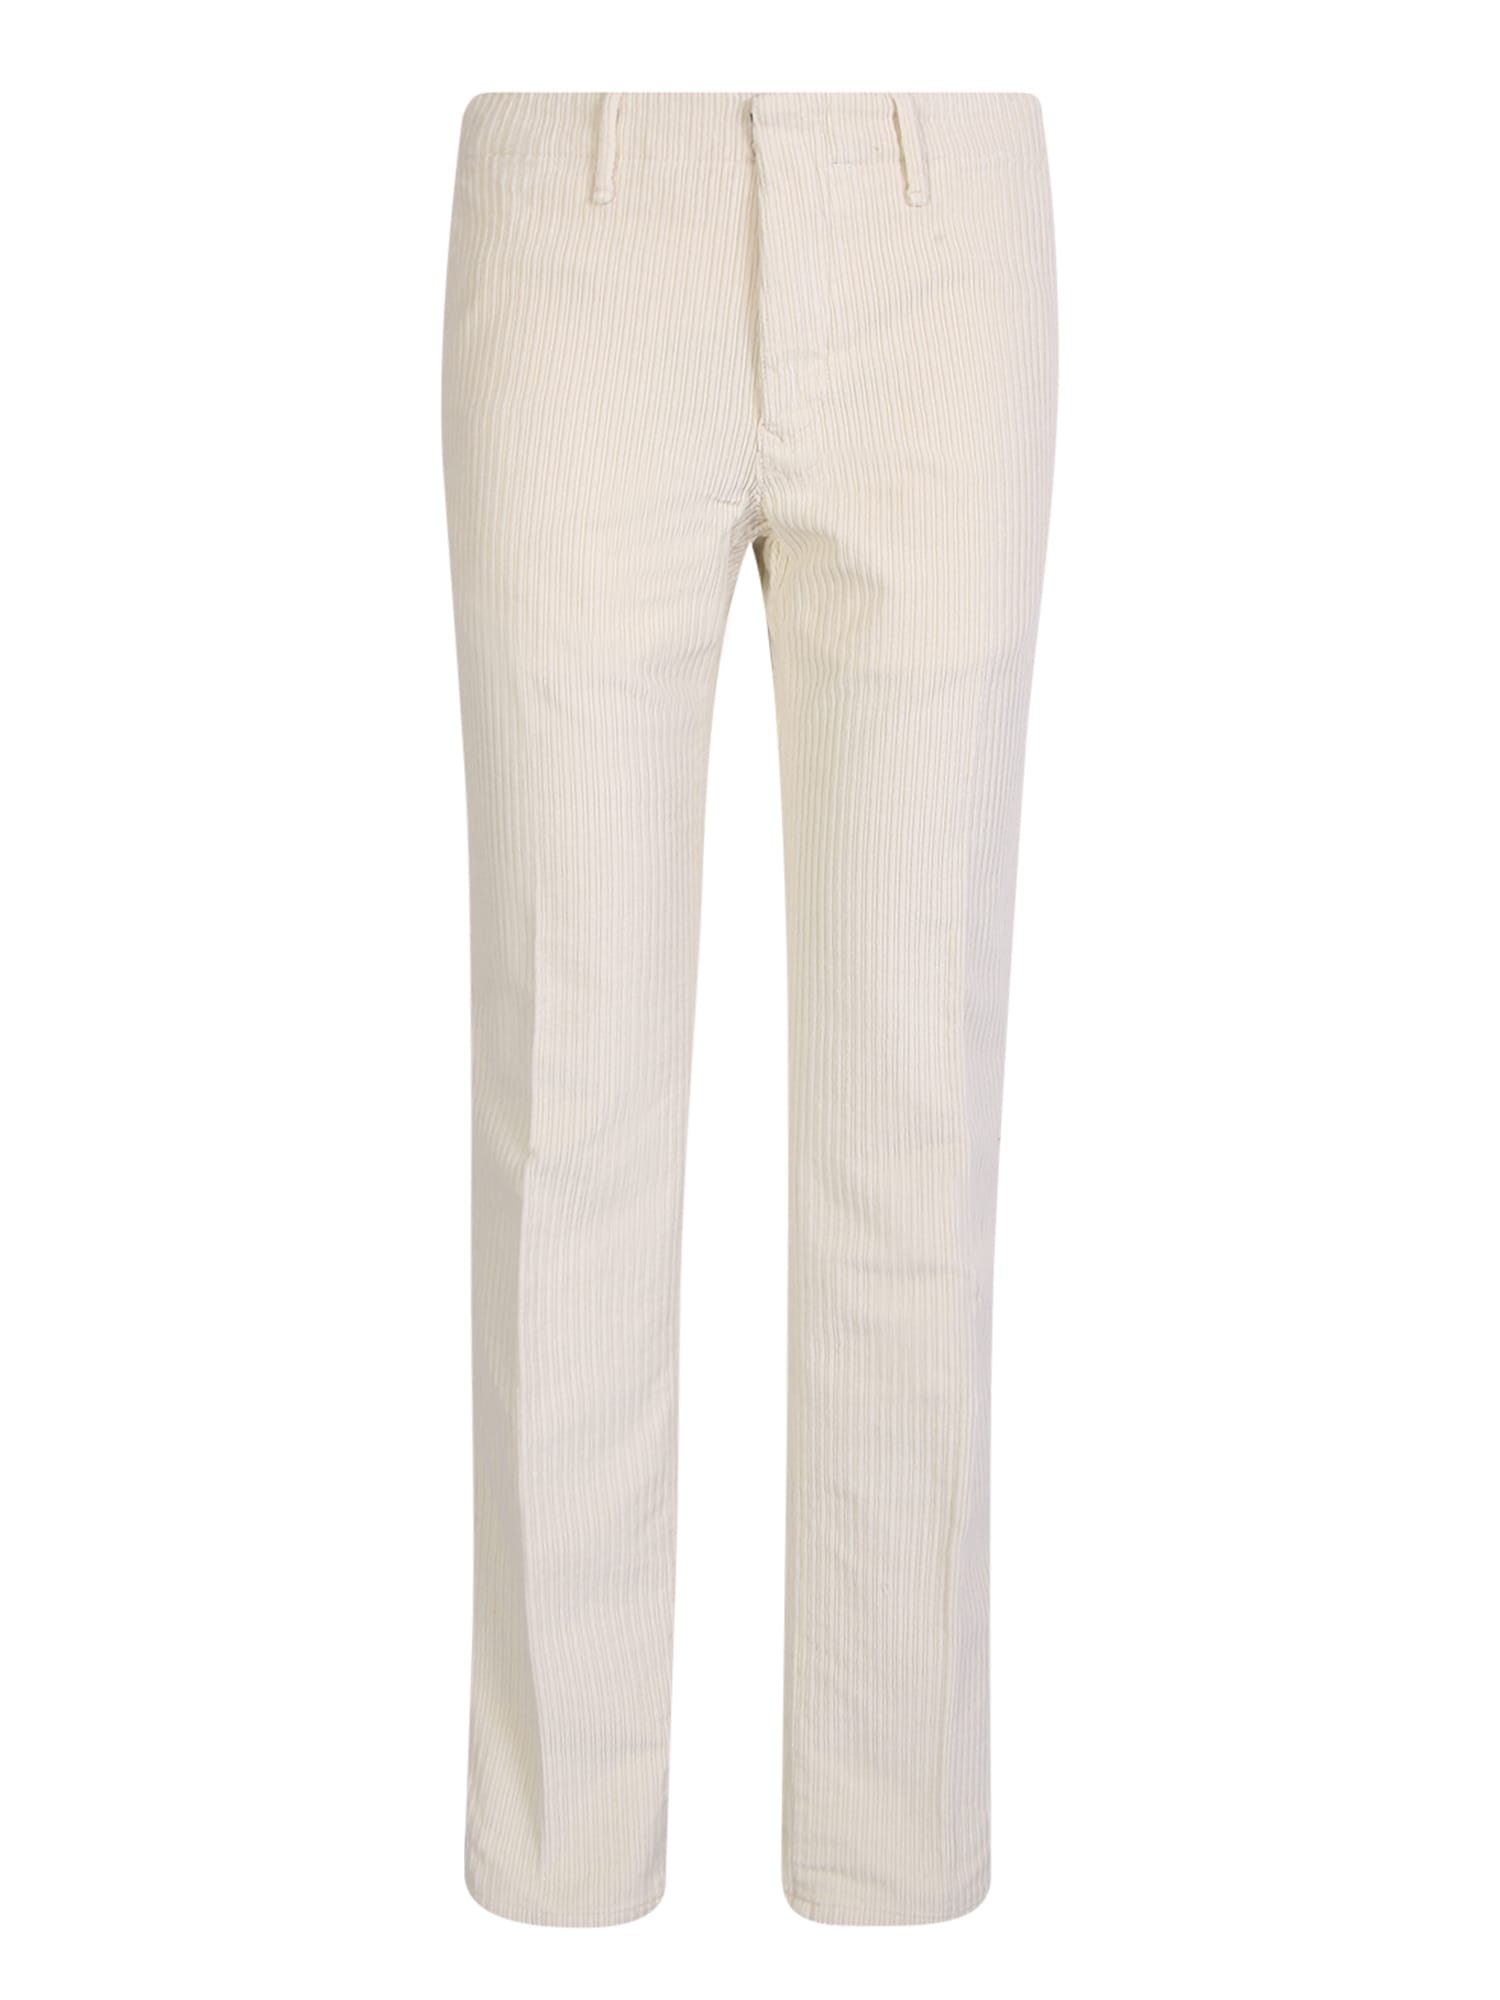 Incotex White Corduroy Trousers